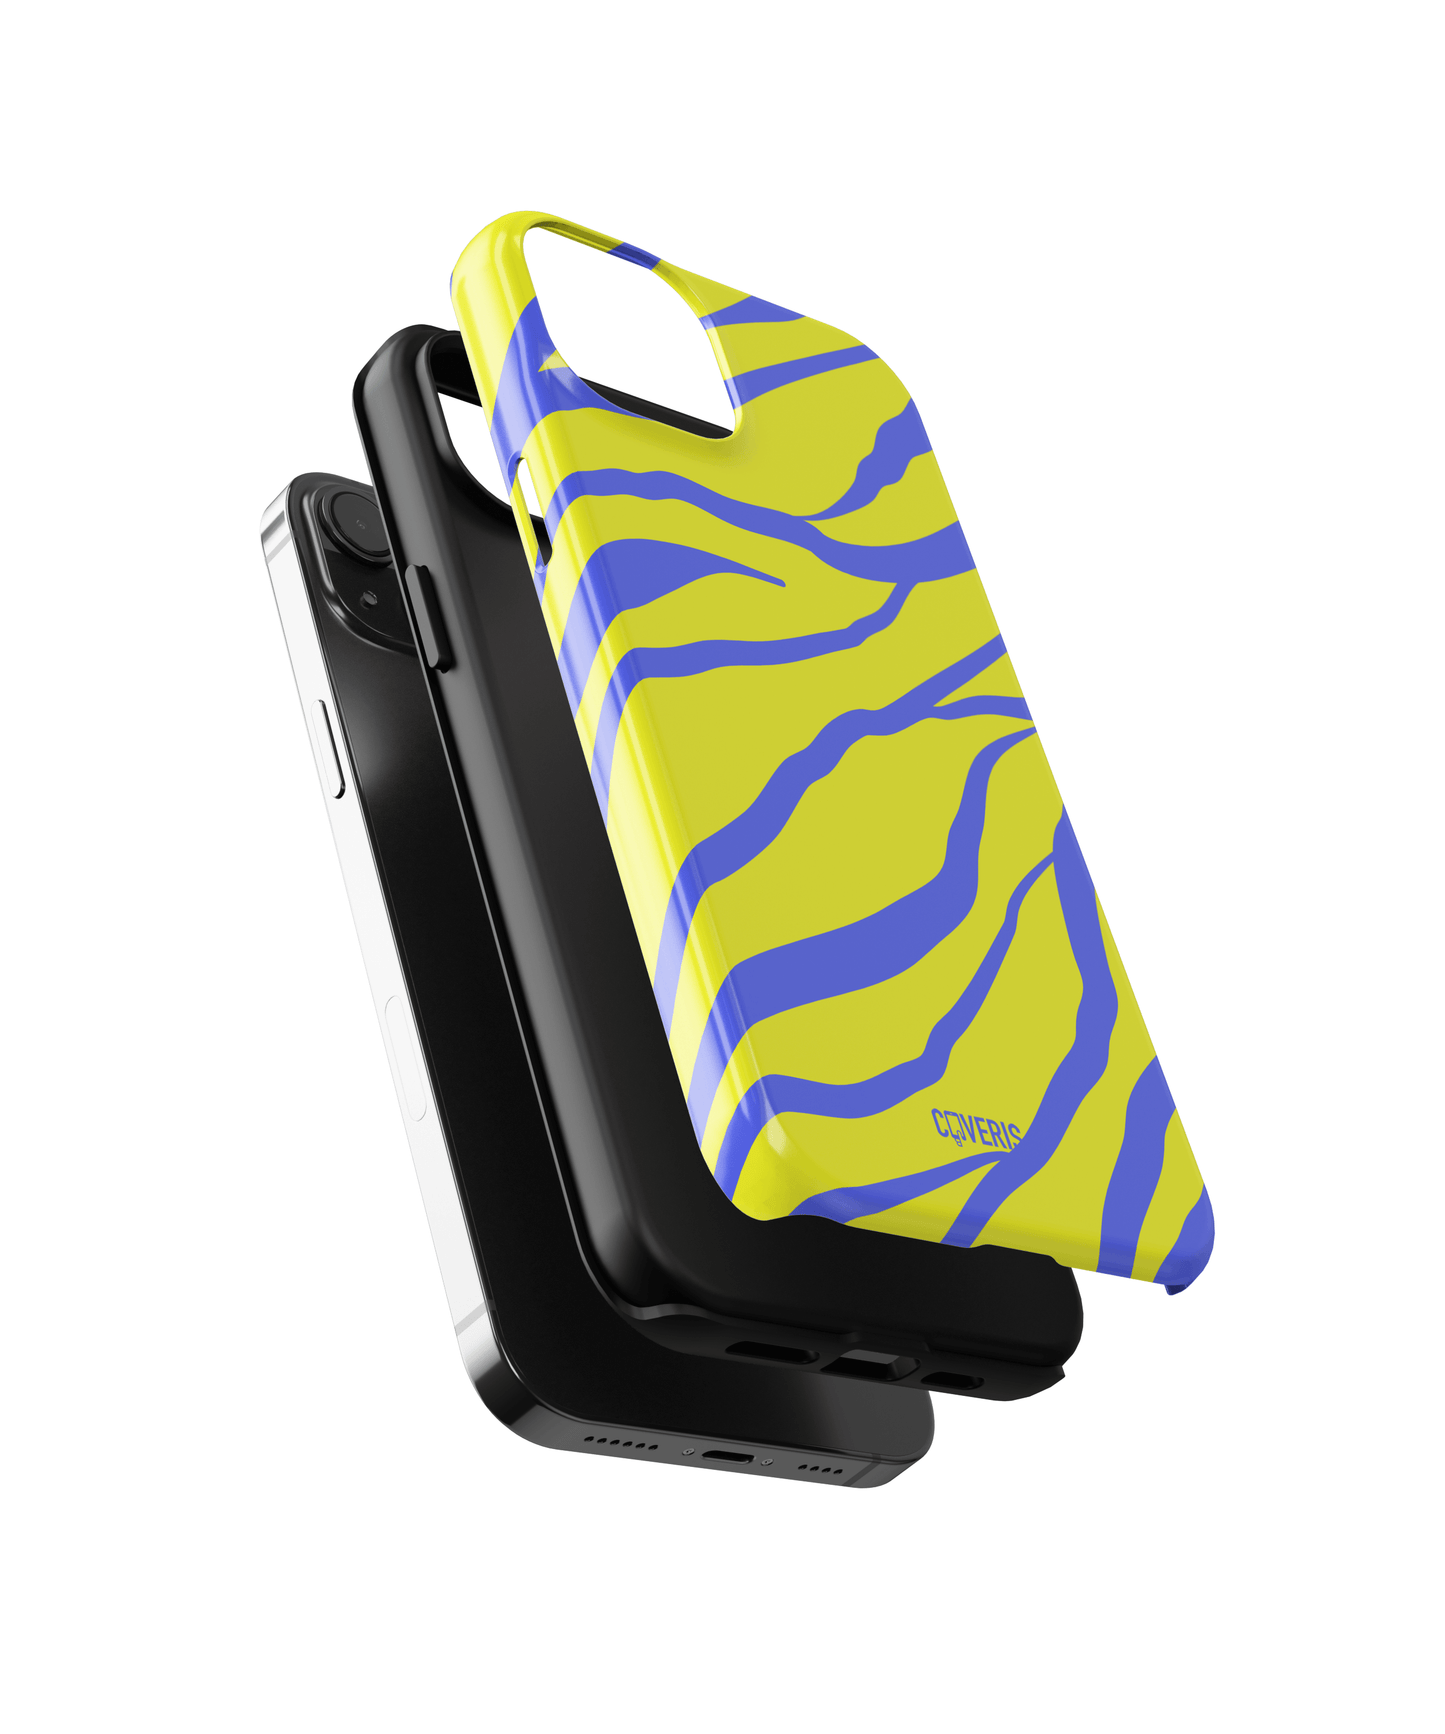 Neonique - Samsung Galaxy S10 Plus phone case